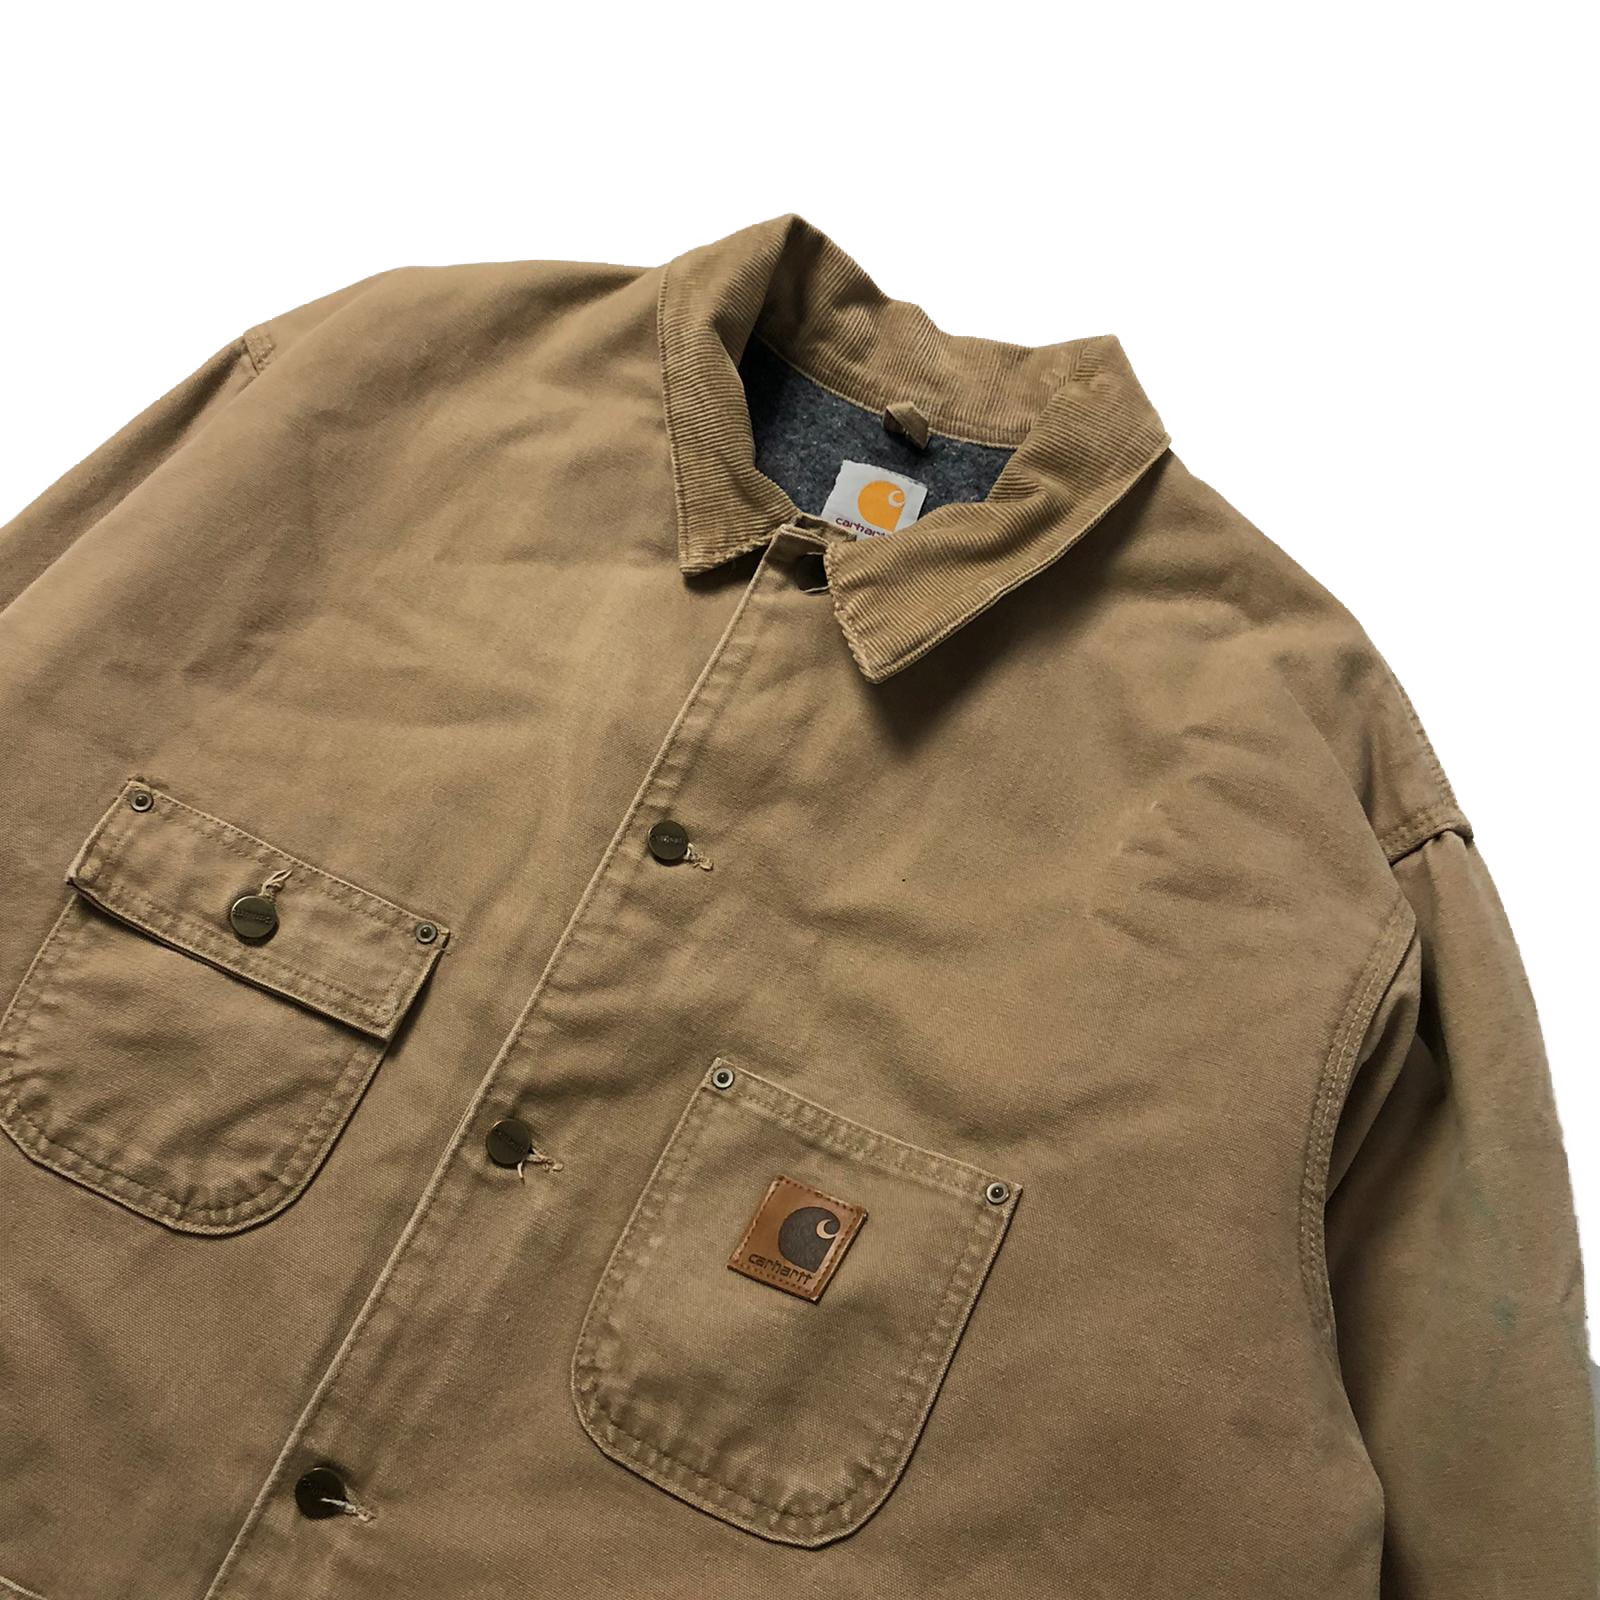 Carhartt workwear jacket